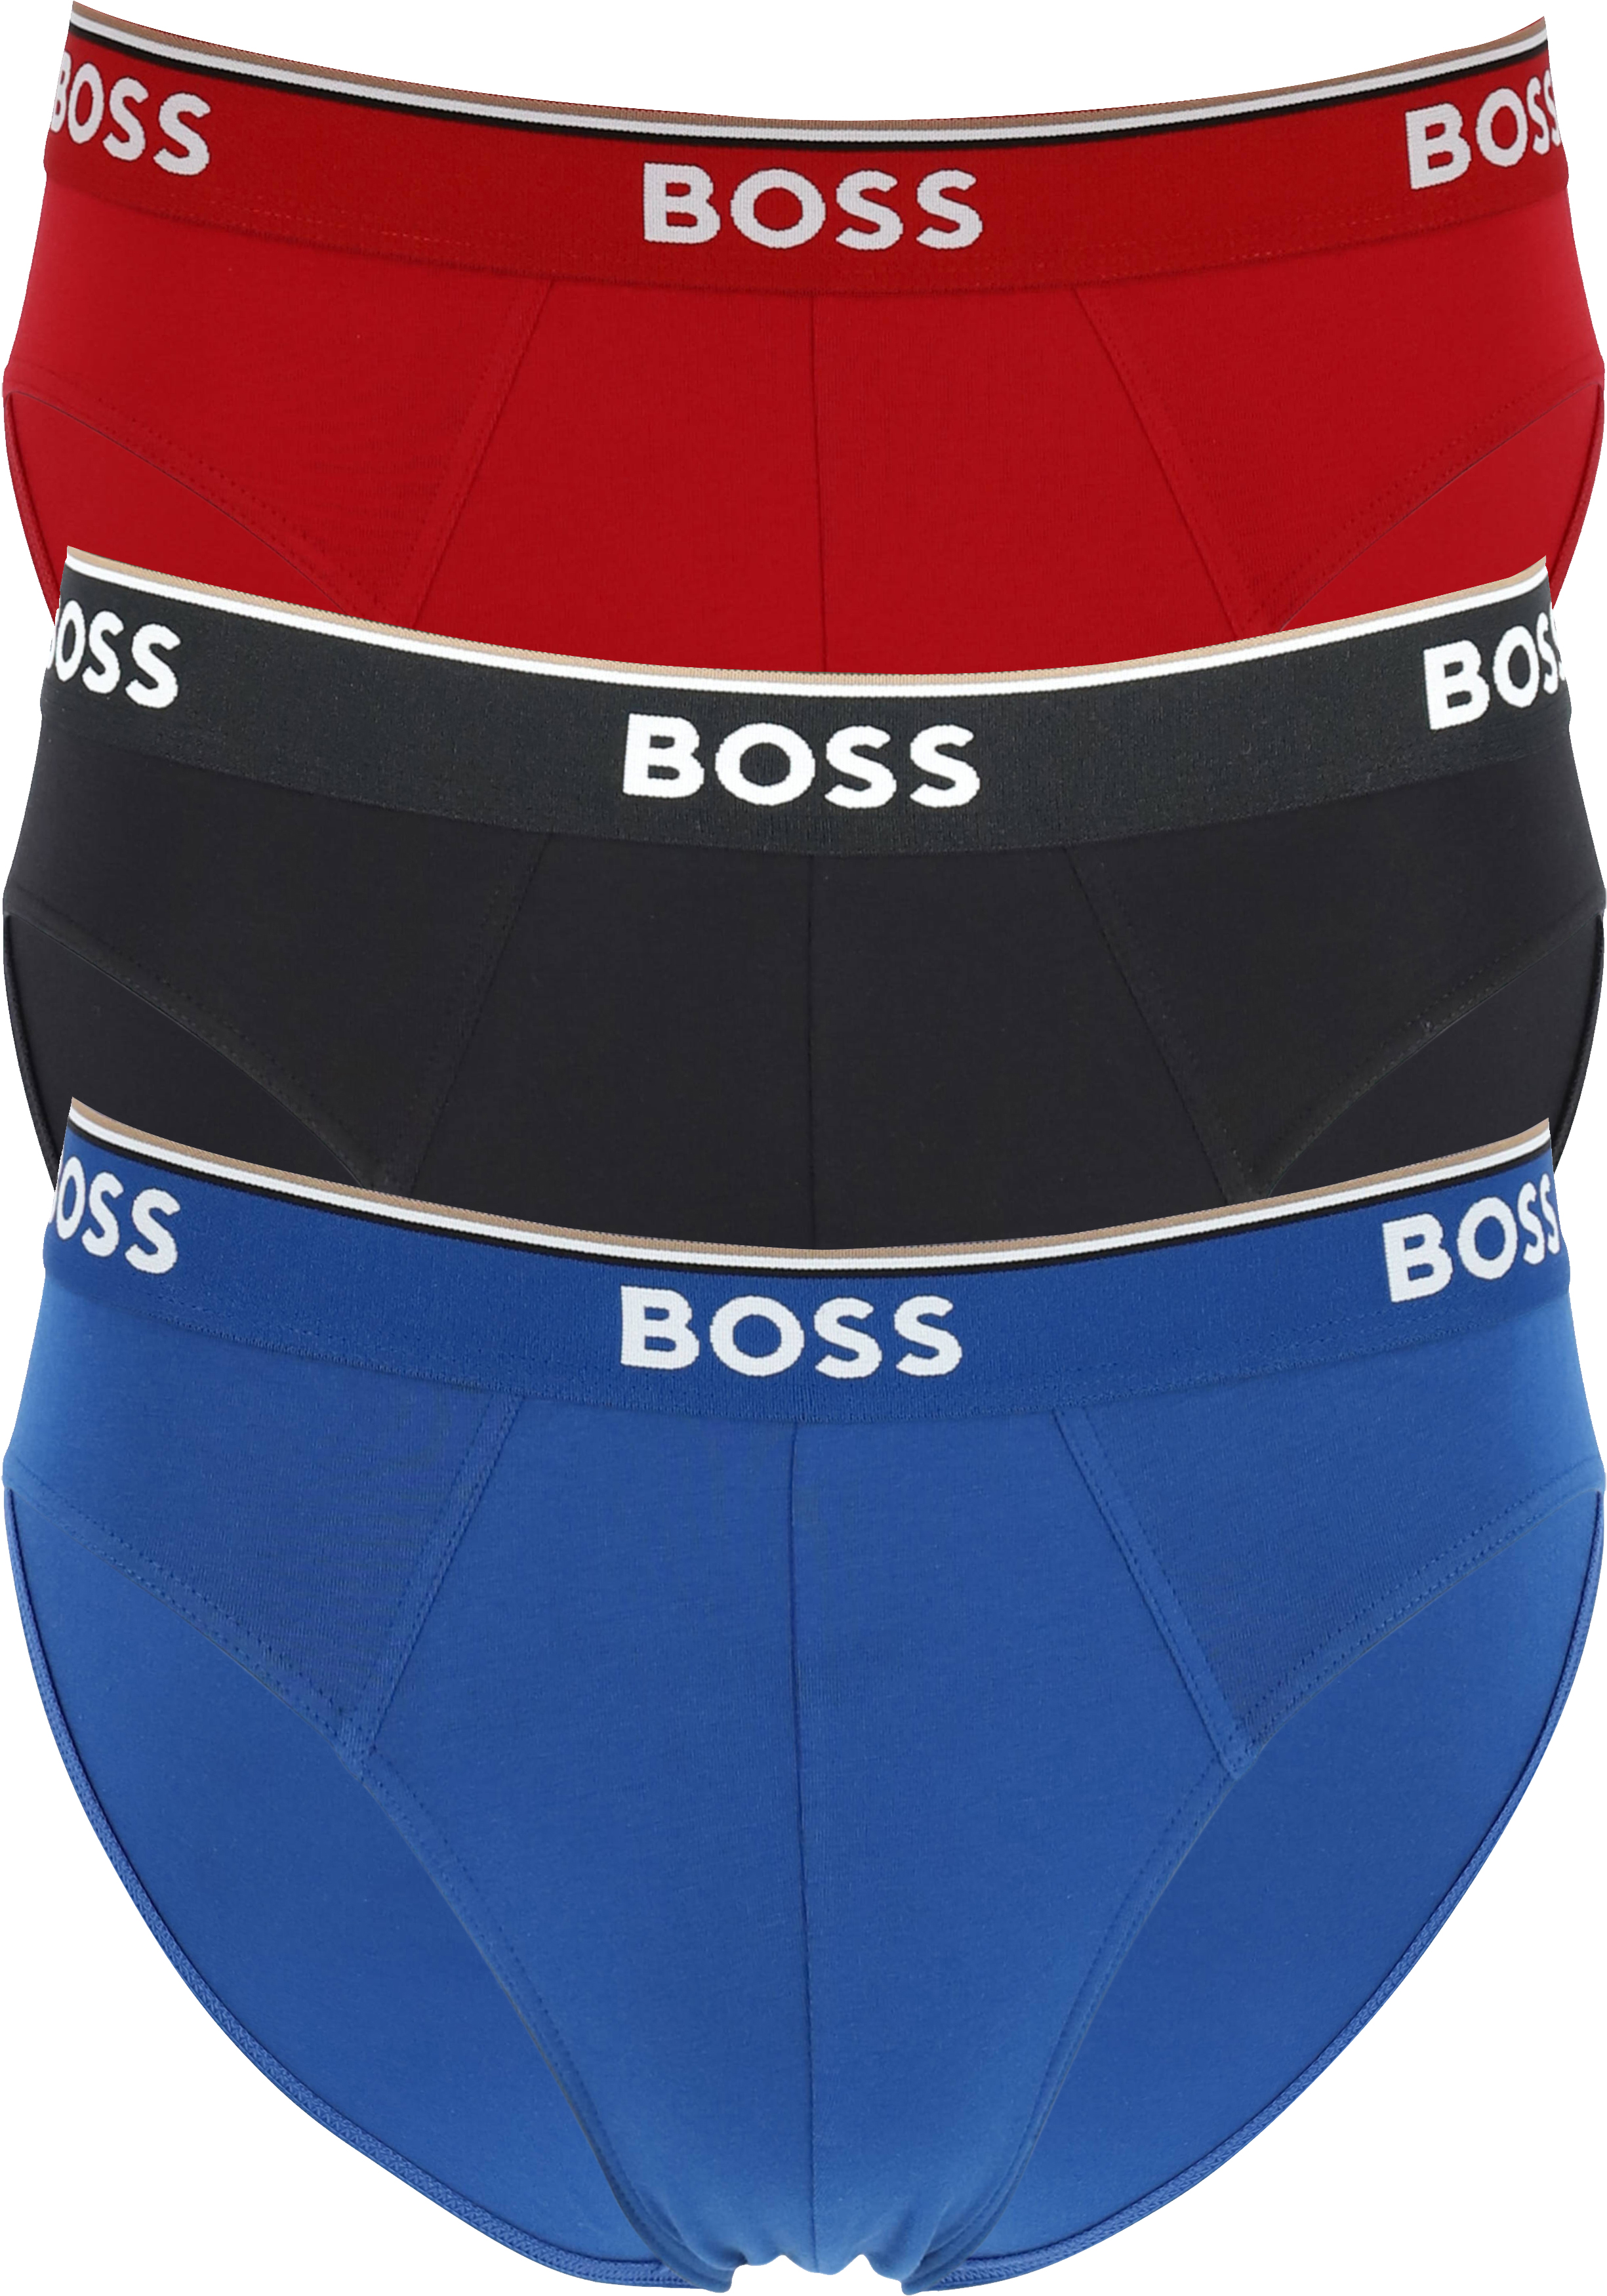 HUGO BOSS Power briefs (3-pack), heren slips, rood, blauw, zwart